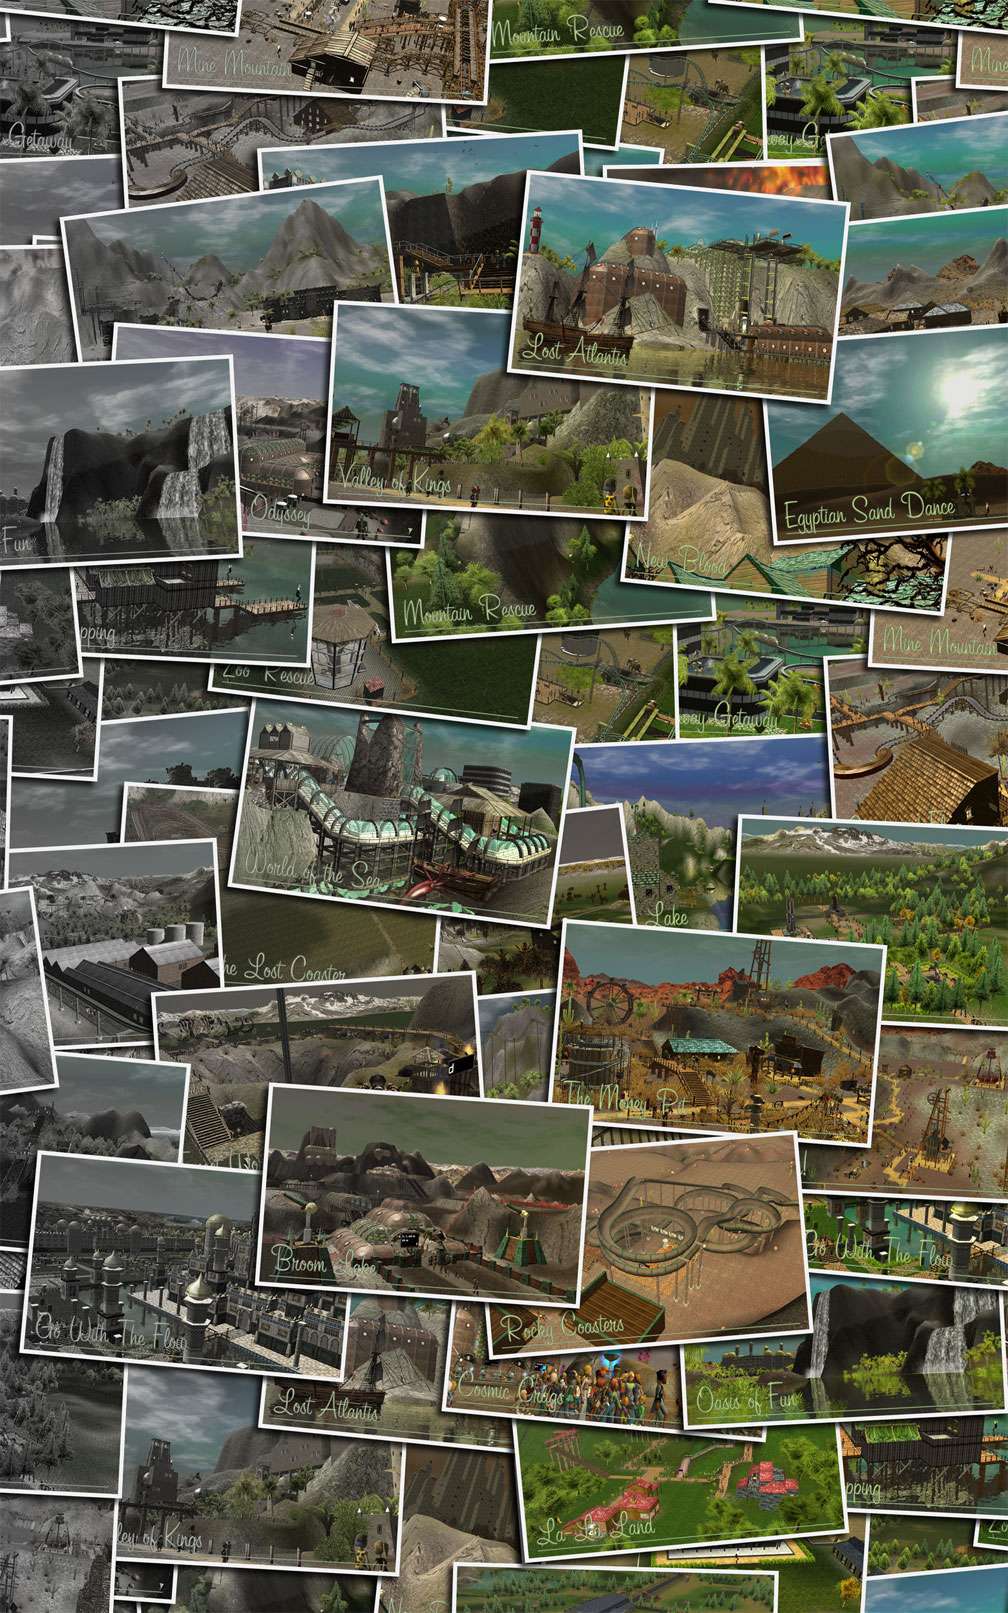 Illustration 01, Demo Screenshot Displaying Individual Scenario Vistas As Scattered Photo Collage - My Downloads, Parks, Scenarios, & Sandboxes - Sandbox Campaign Parks